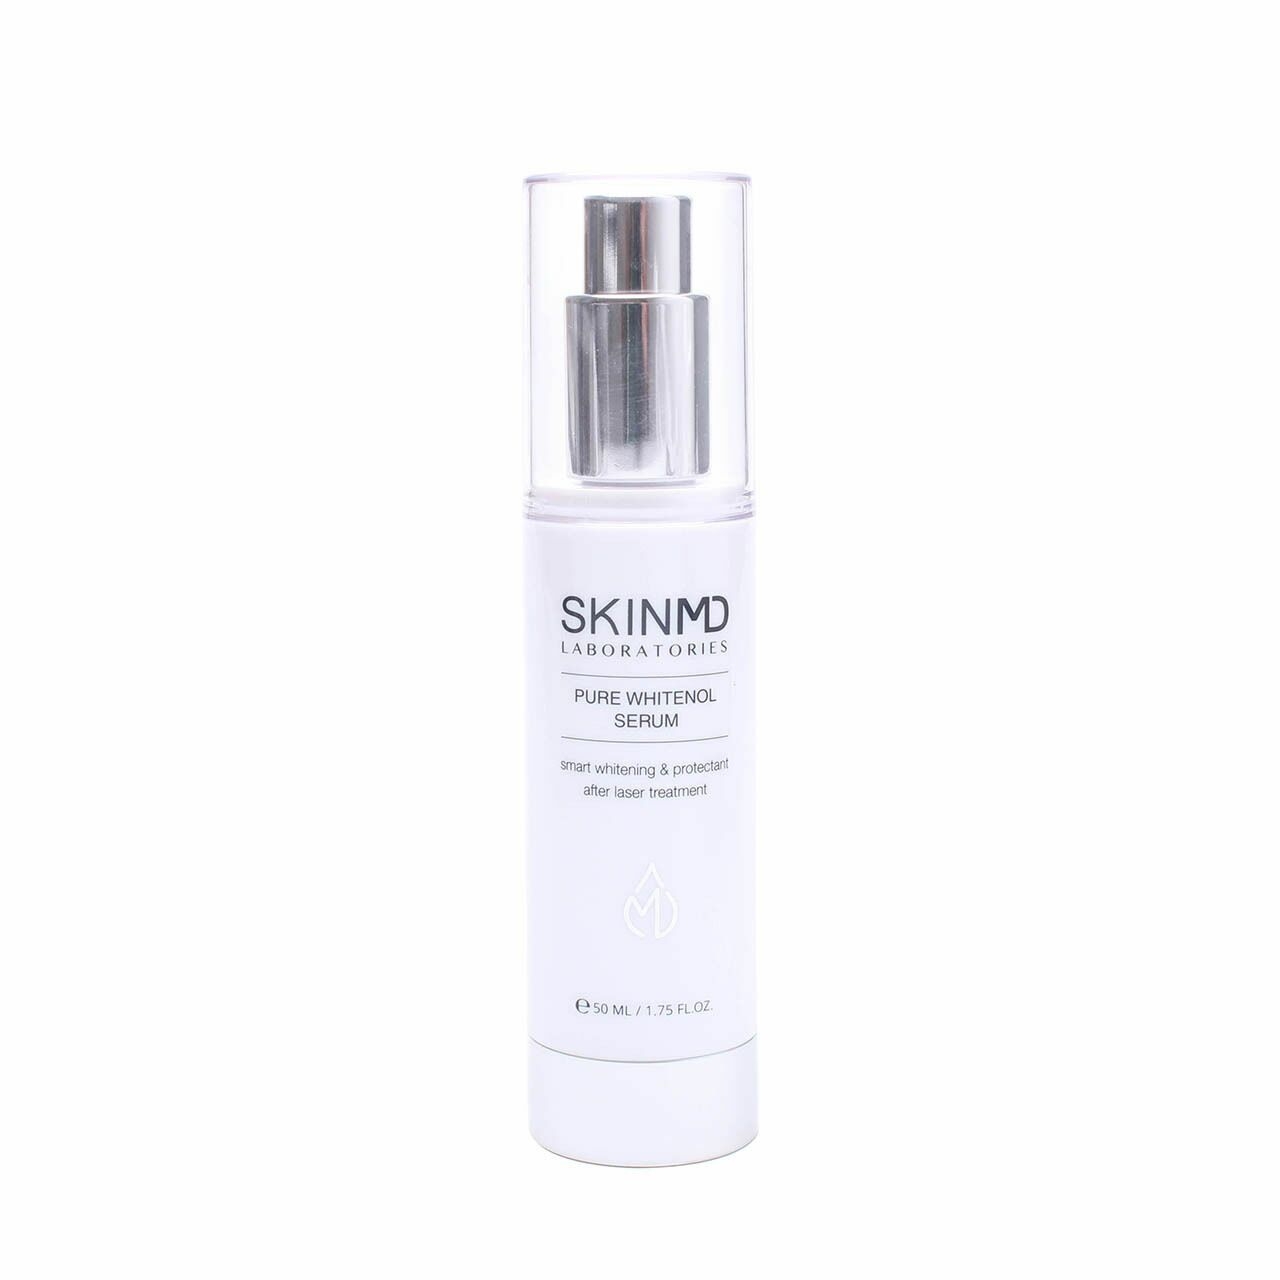 SKINMD Pure Whitenol Serum Skin Care